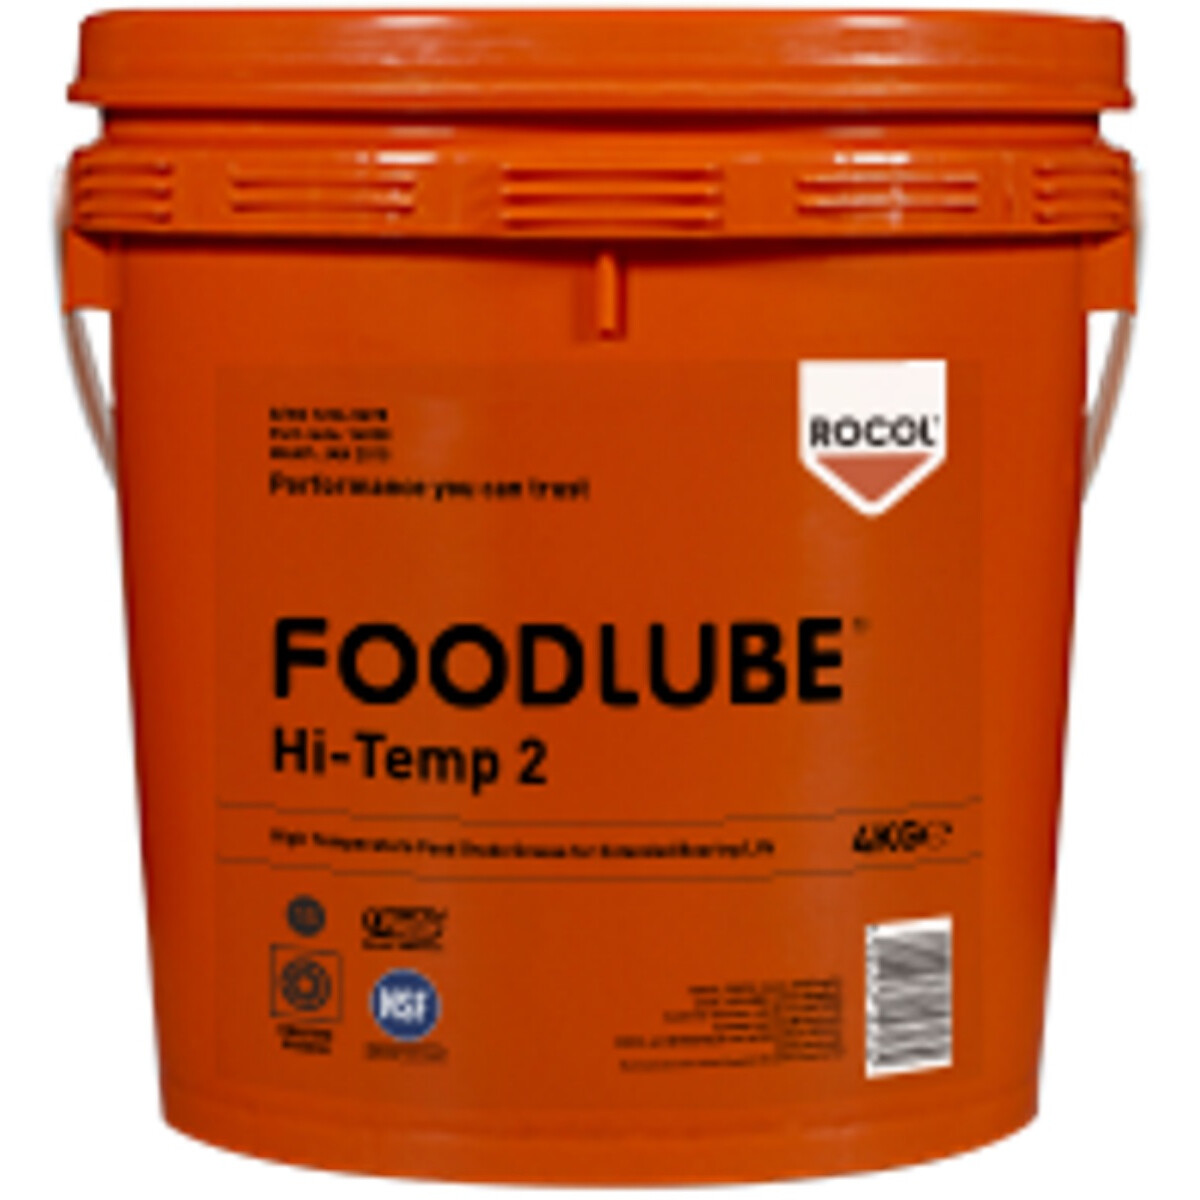 Rocol 15256 Foodlube Hi-Temp Food Grade Grease 2 (NSF Registered) 4kg